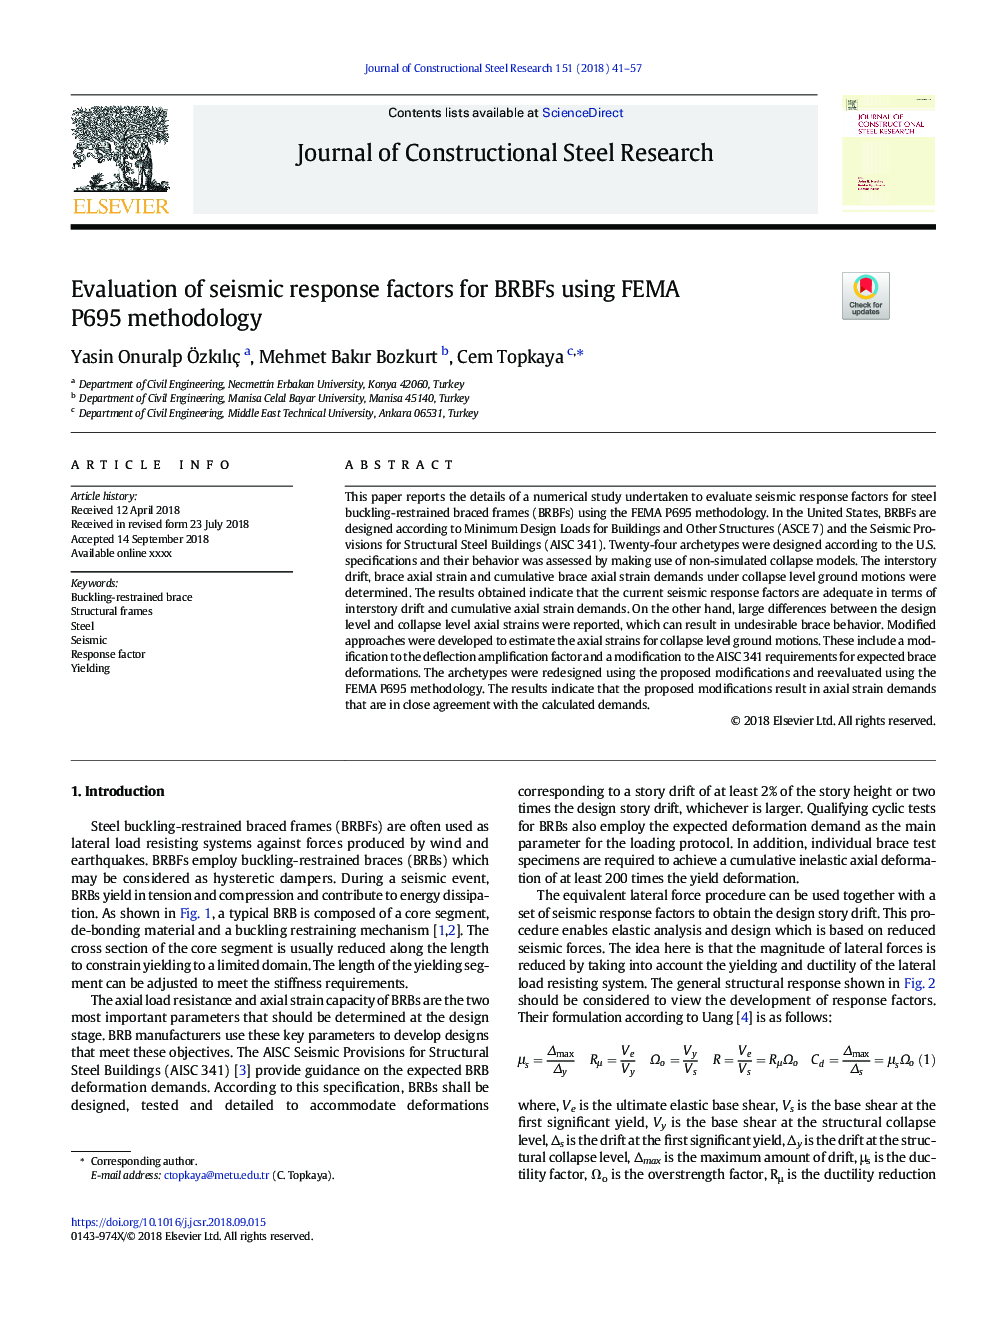 Evaluation of seismic response factors for BRBFs using FEMA P695 methodology